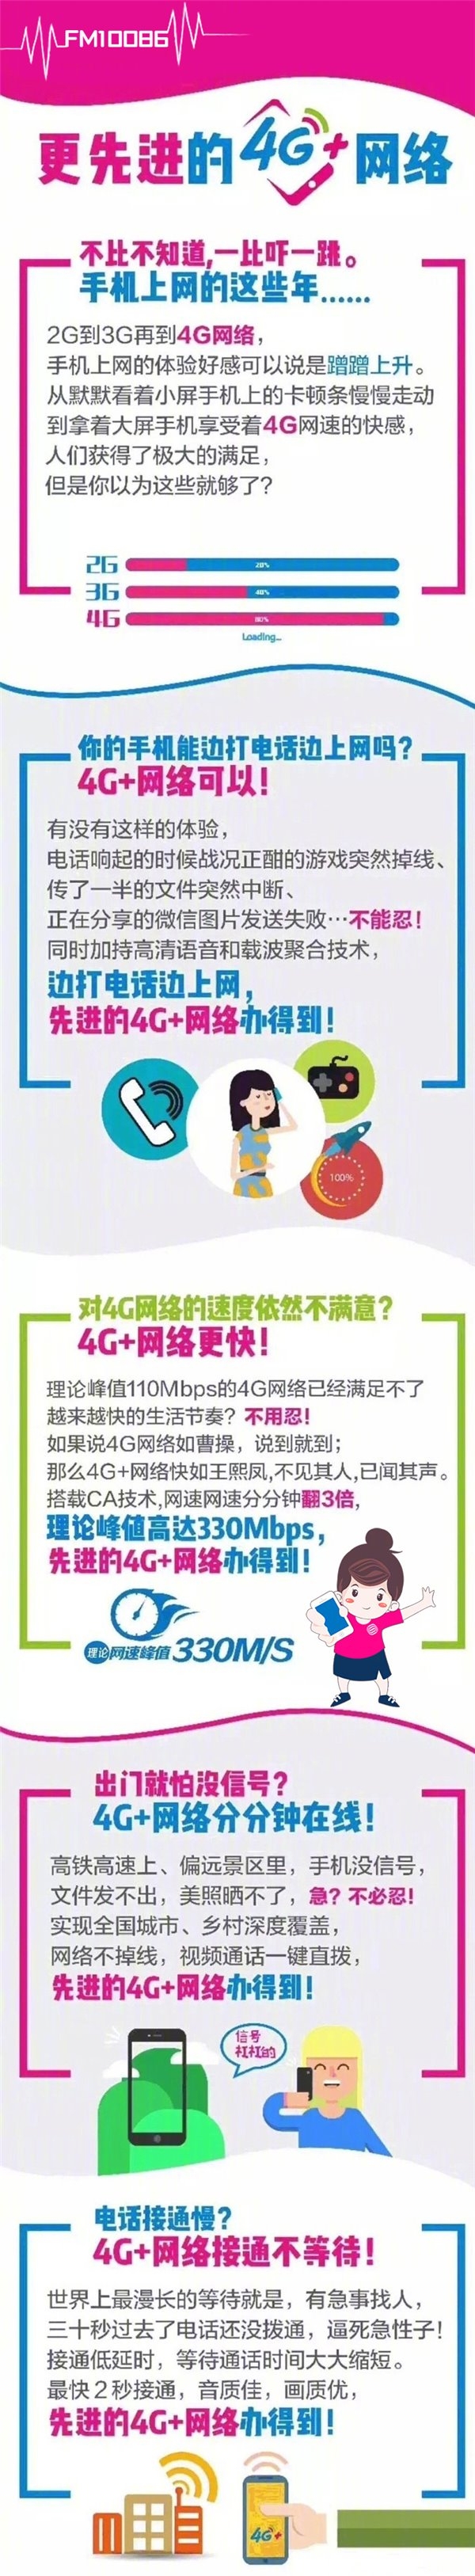 IT之家12月26日消息 在全面步入4G时代之后，中国移动和中国电信又先后提出了“4G+”的概念，那么4G+网络相比于4G网络到底先进在哪里呢？中国移动官方刚刚发布了一张科普图，为我们介